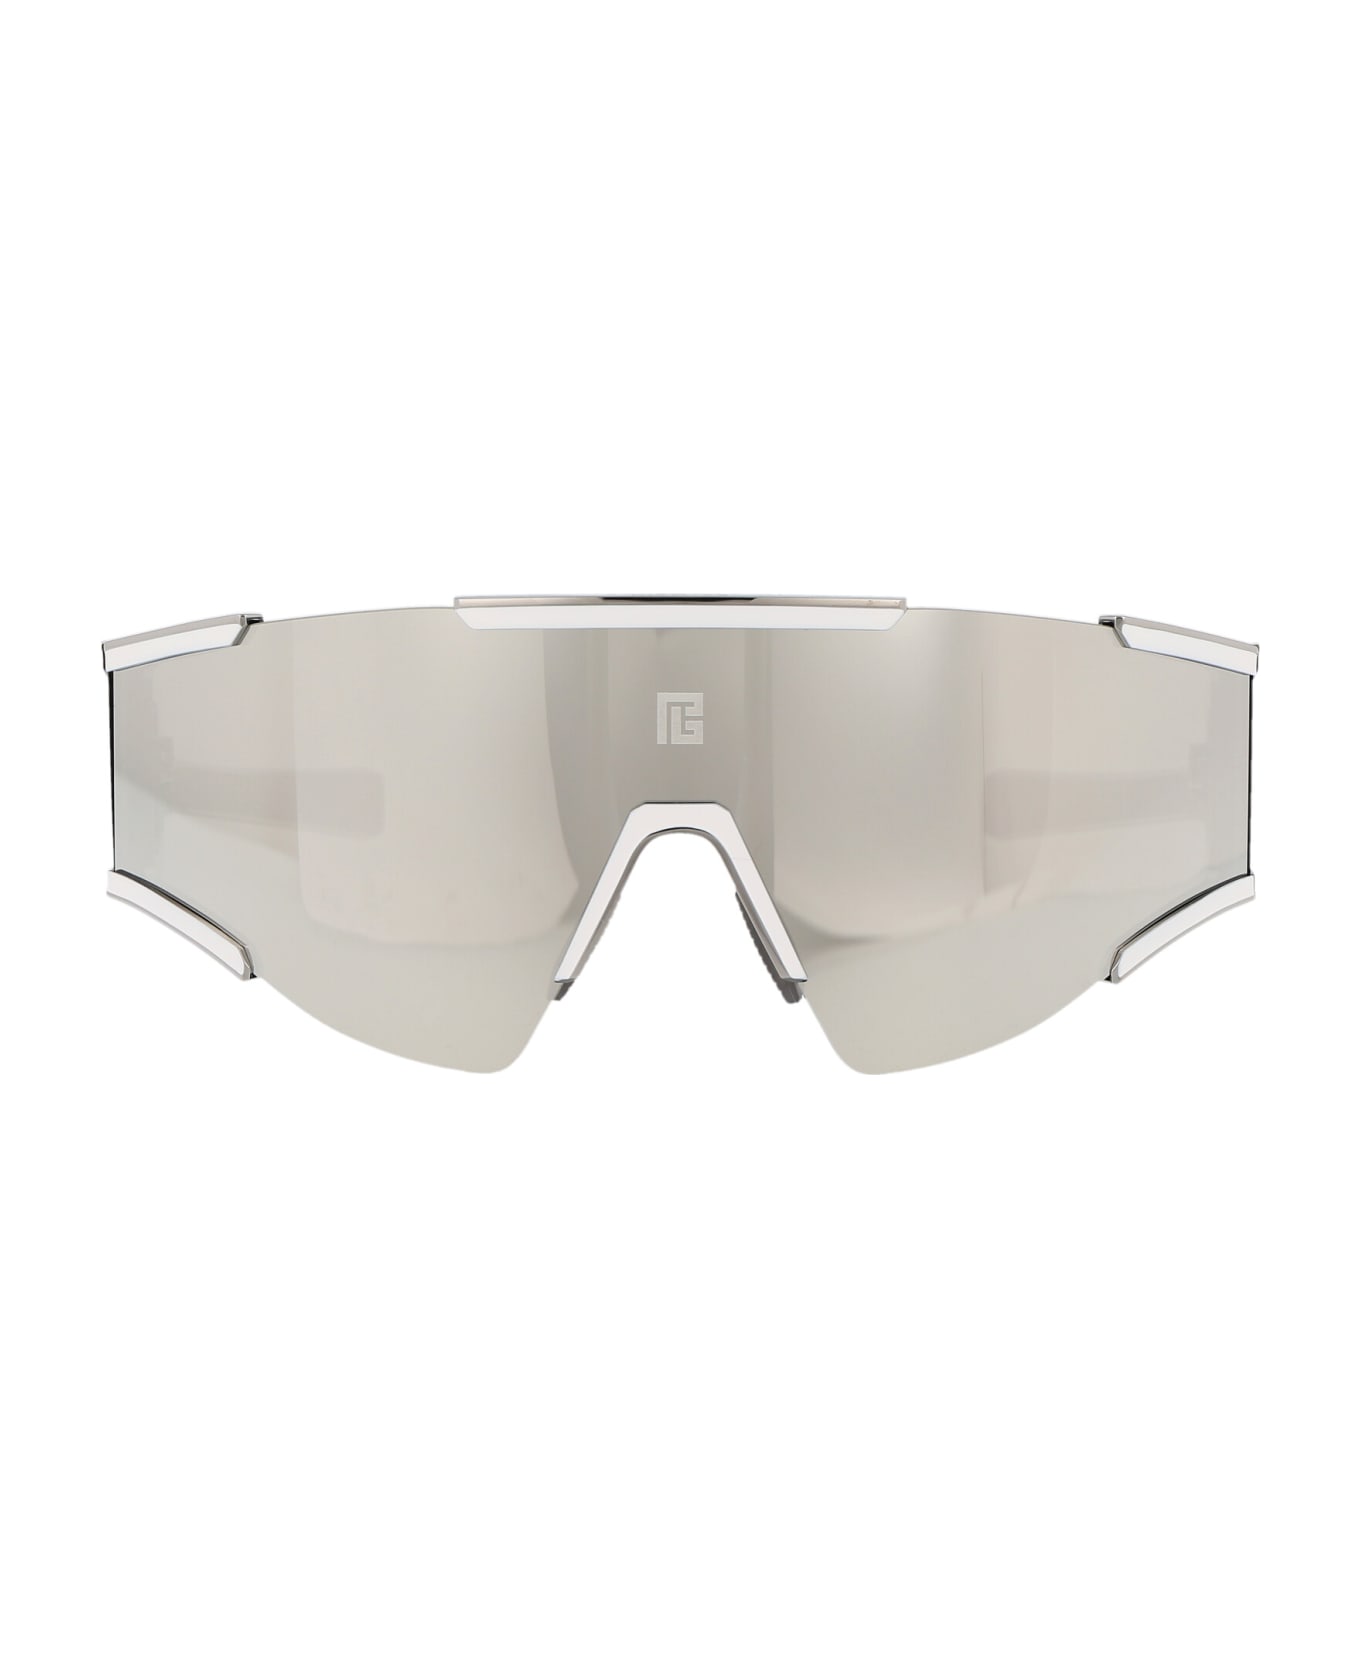 Balmain Fleche Sunglasses - 138D PLD - GRY